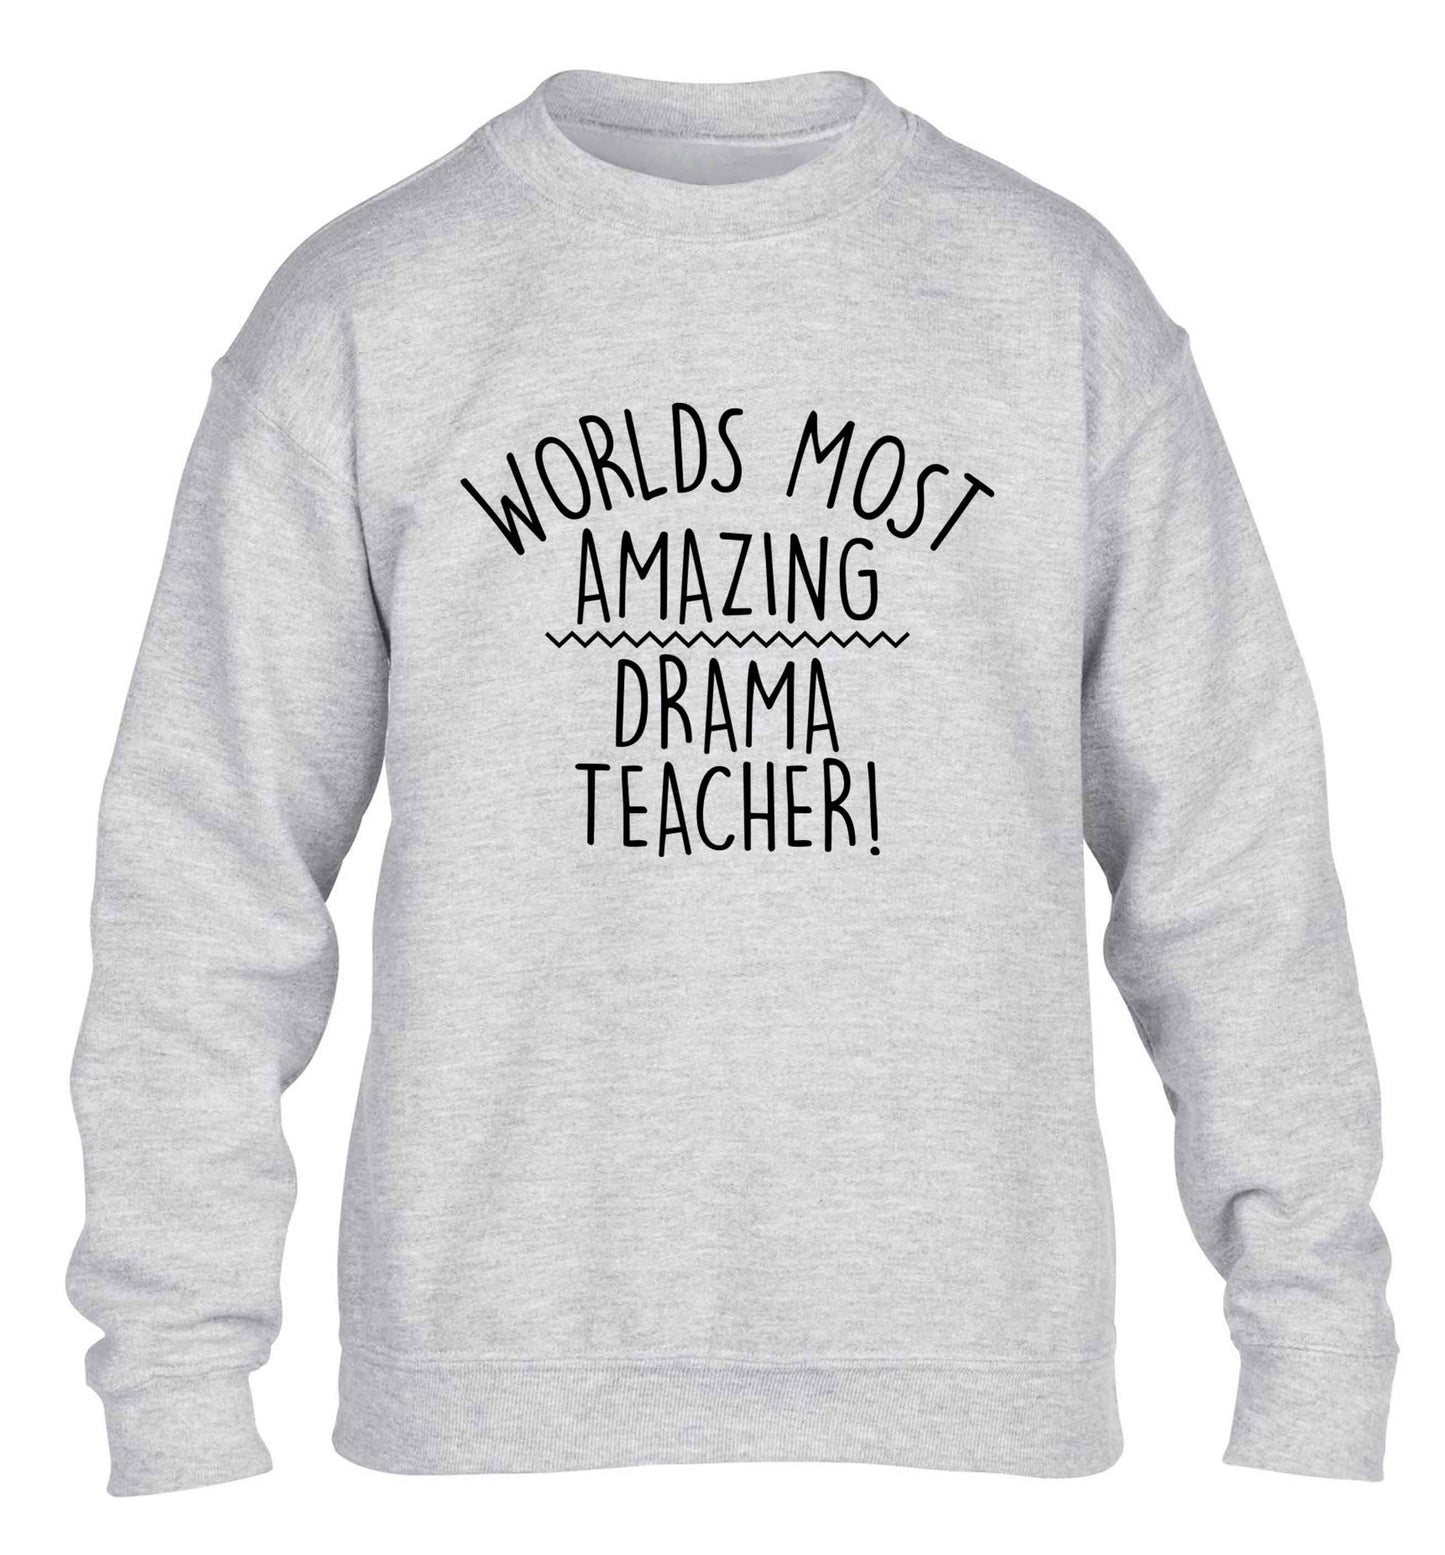 Worlds most amazing drama teacher children's grey sweater 12-13 Years